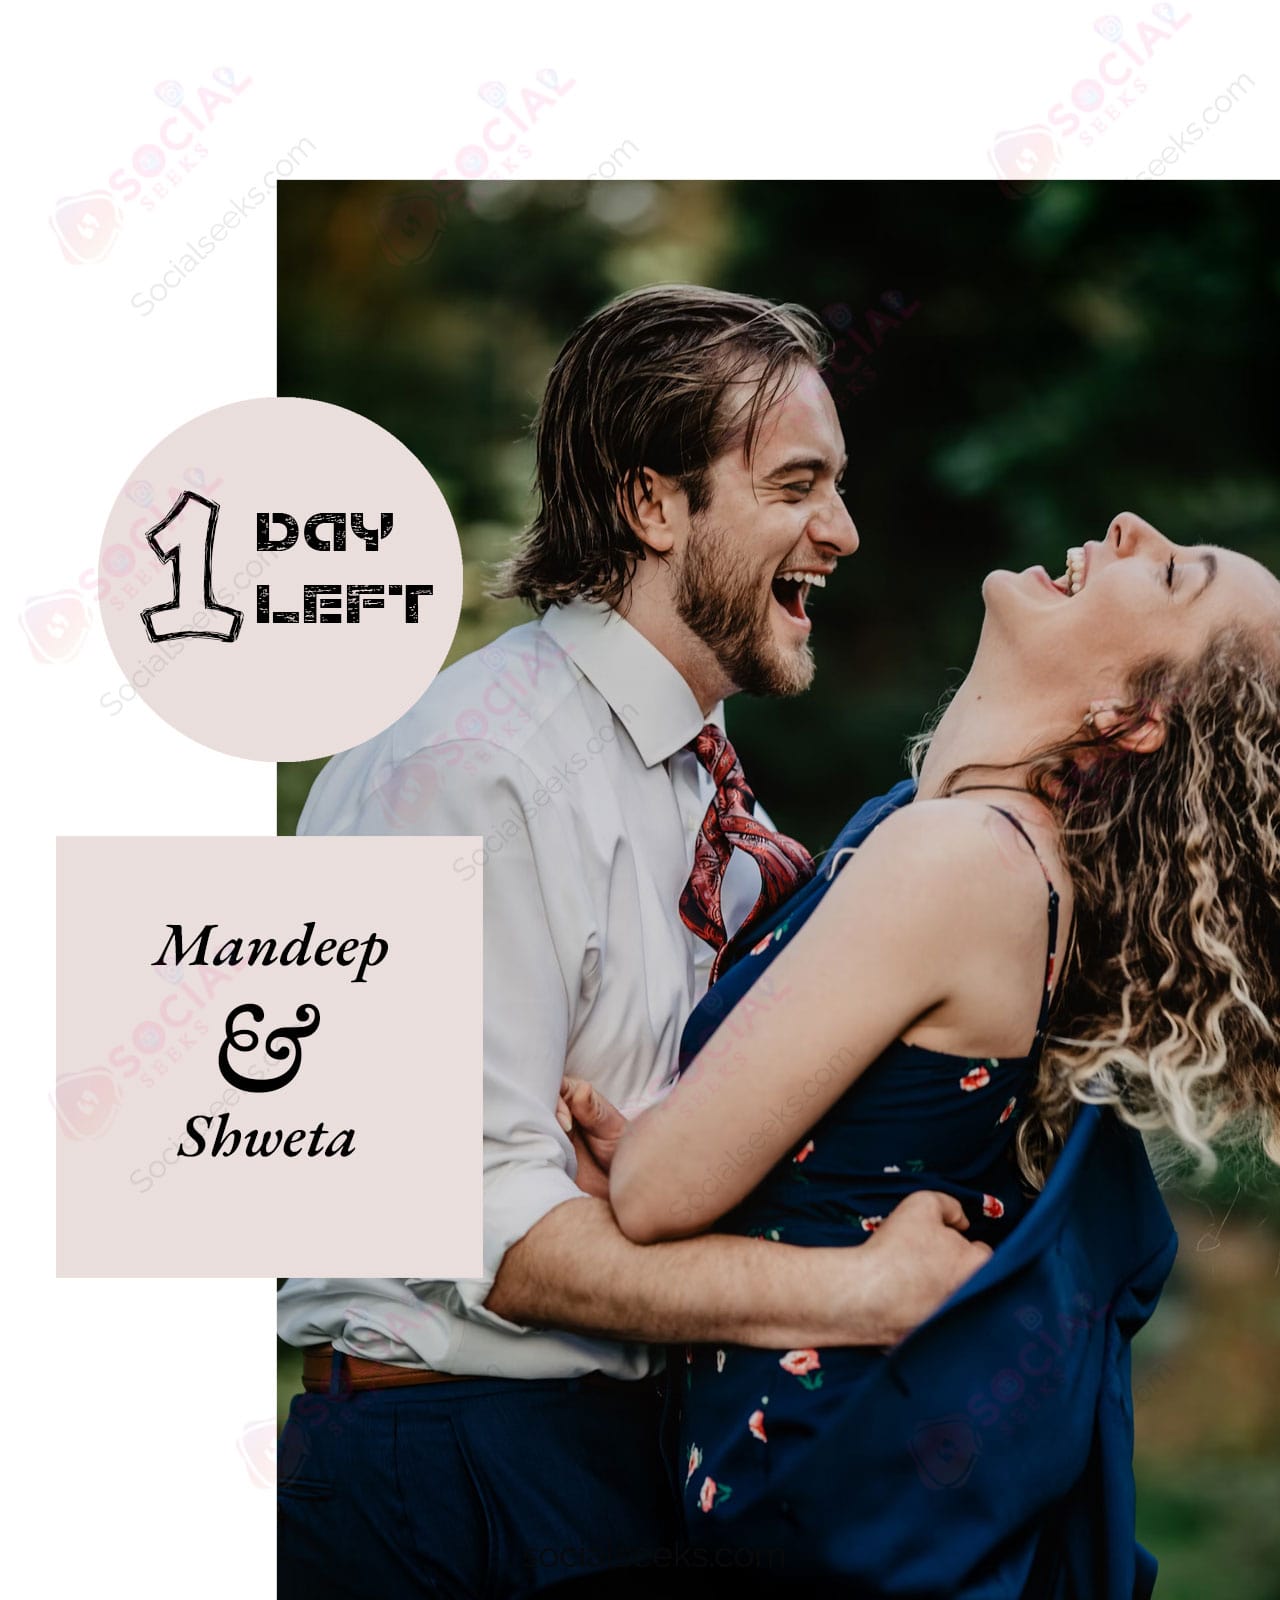 1 Days to go wedding countdown photo frame with couple name